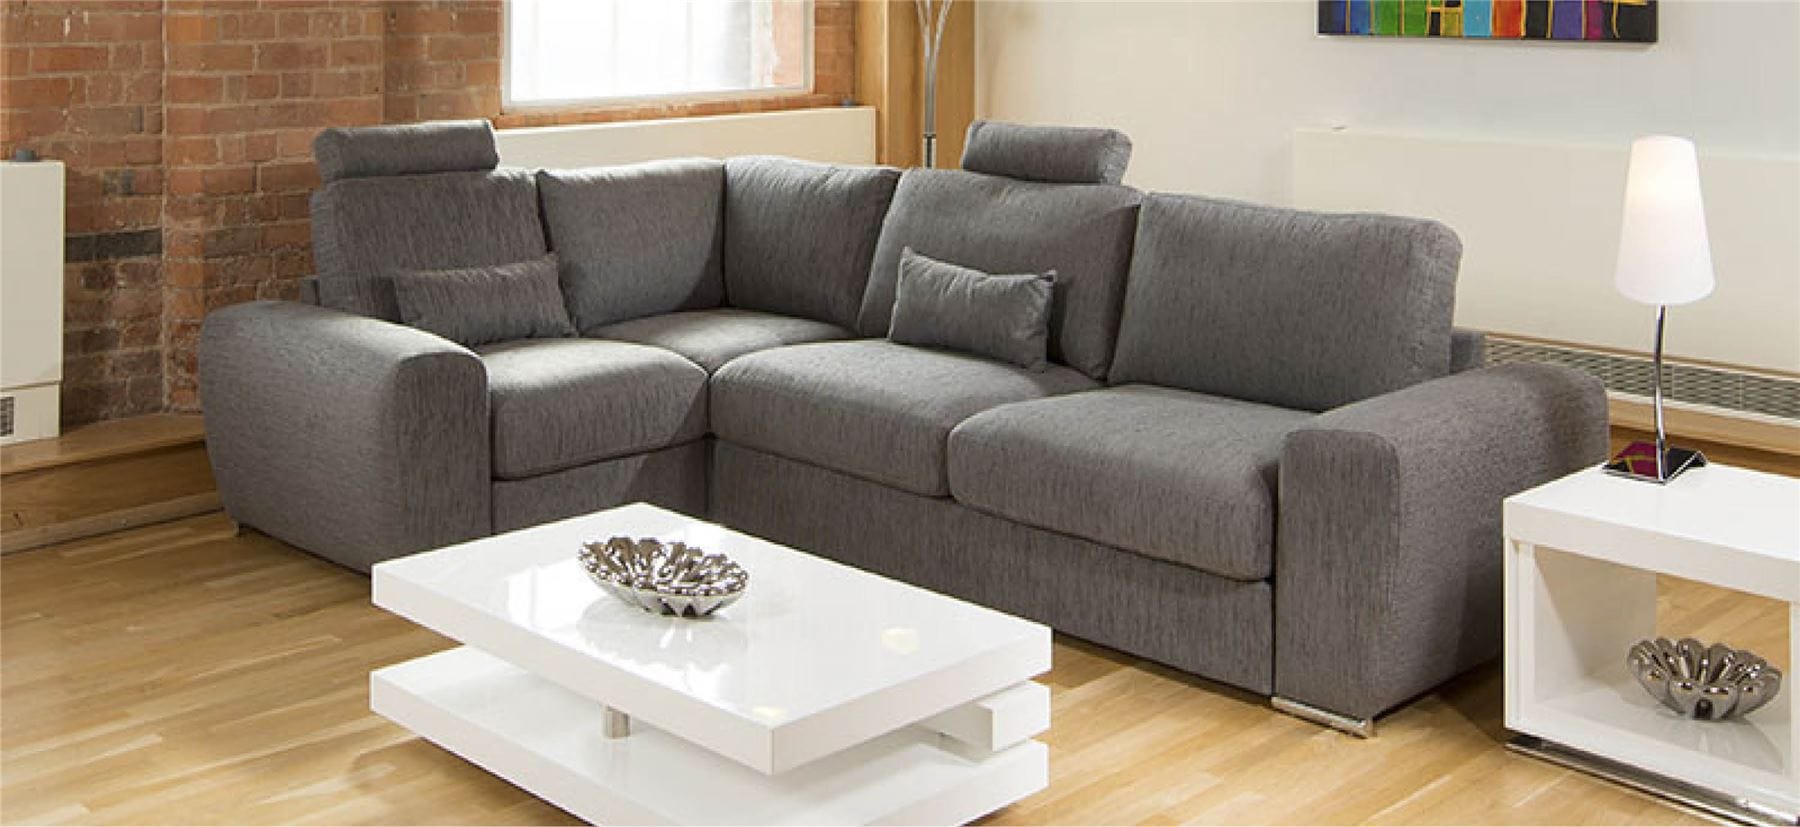 Quatropi Massive Modern Deep Sofa Couch Corner Group Any Colour Grande 8RH